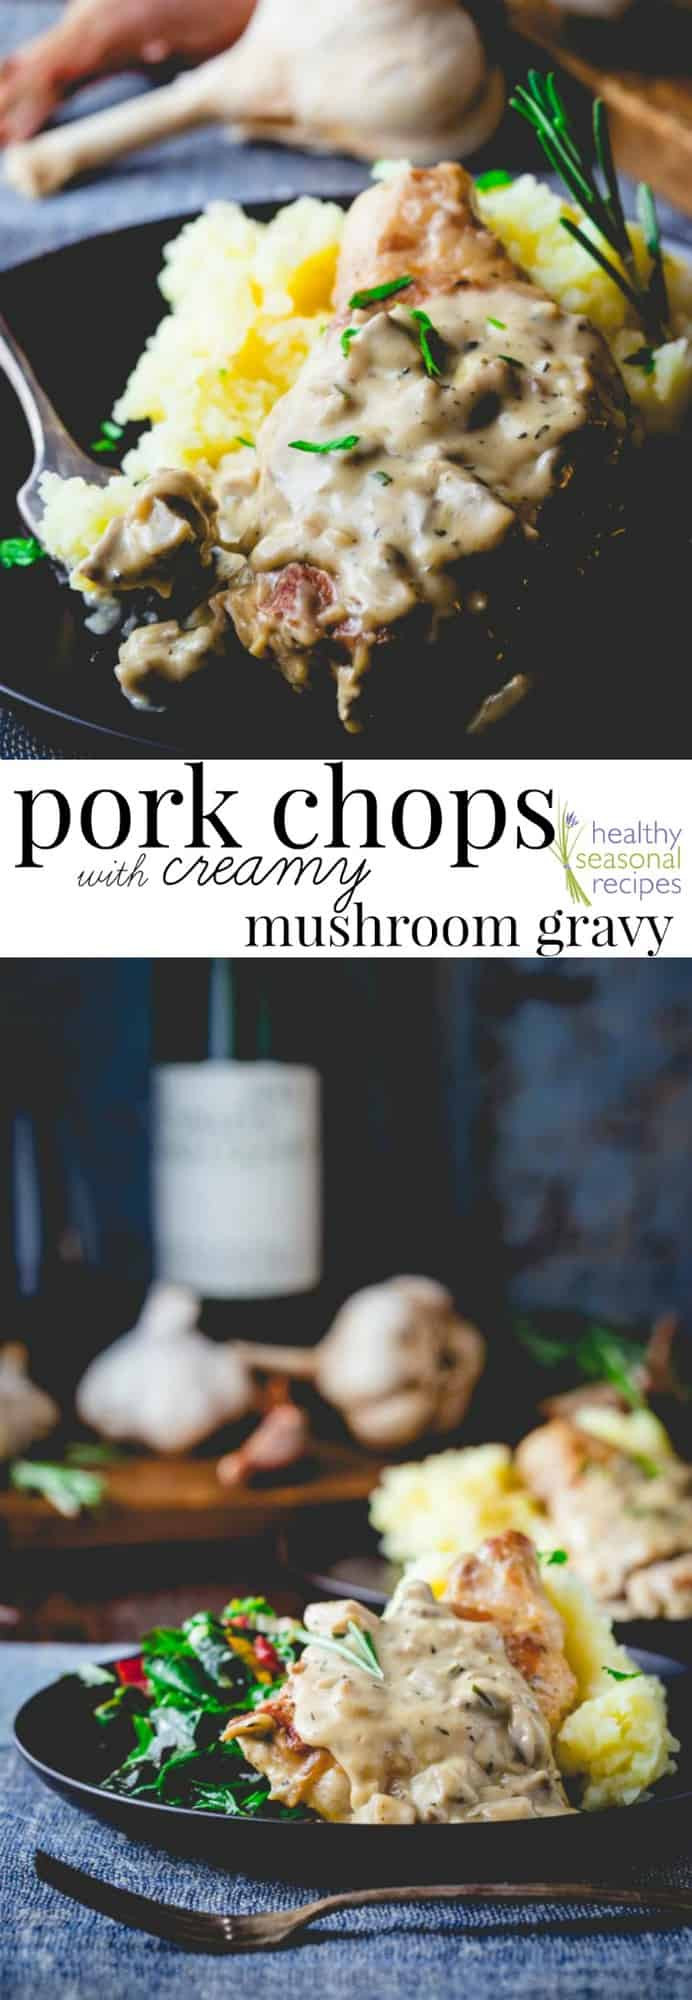 Cream Of Mushroom Gravy
 pork chops with creamy mushroom gravy Healthy Seasonal